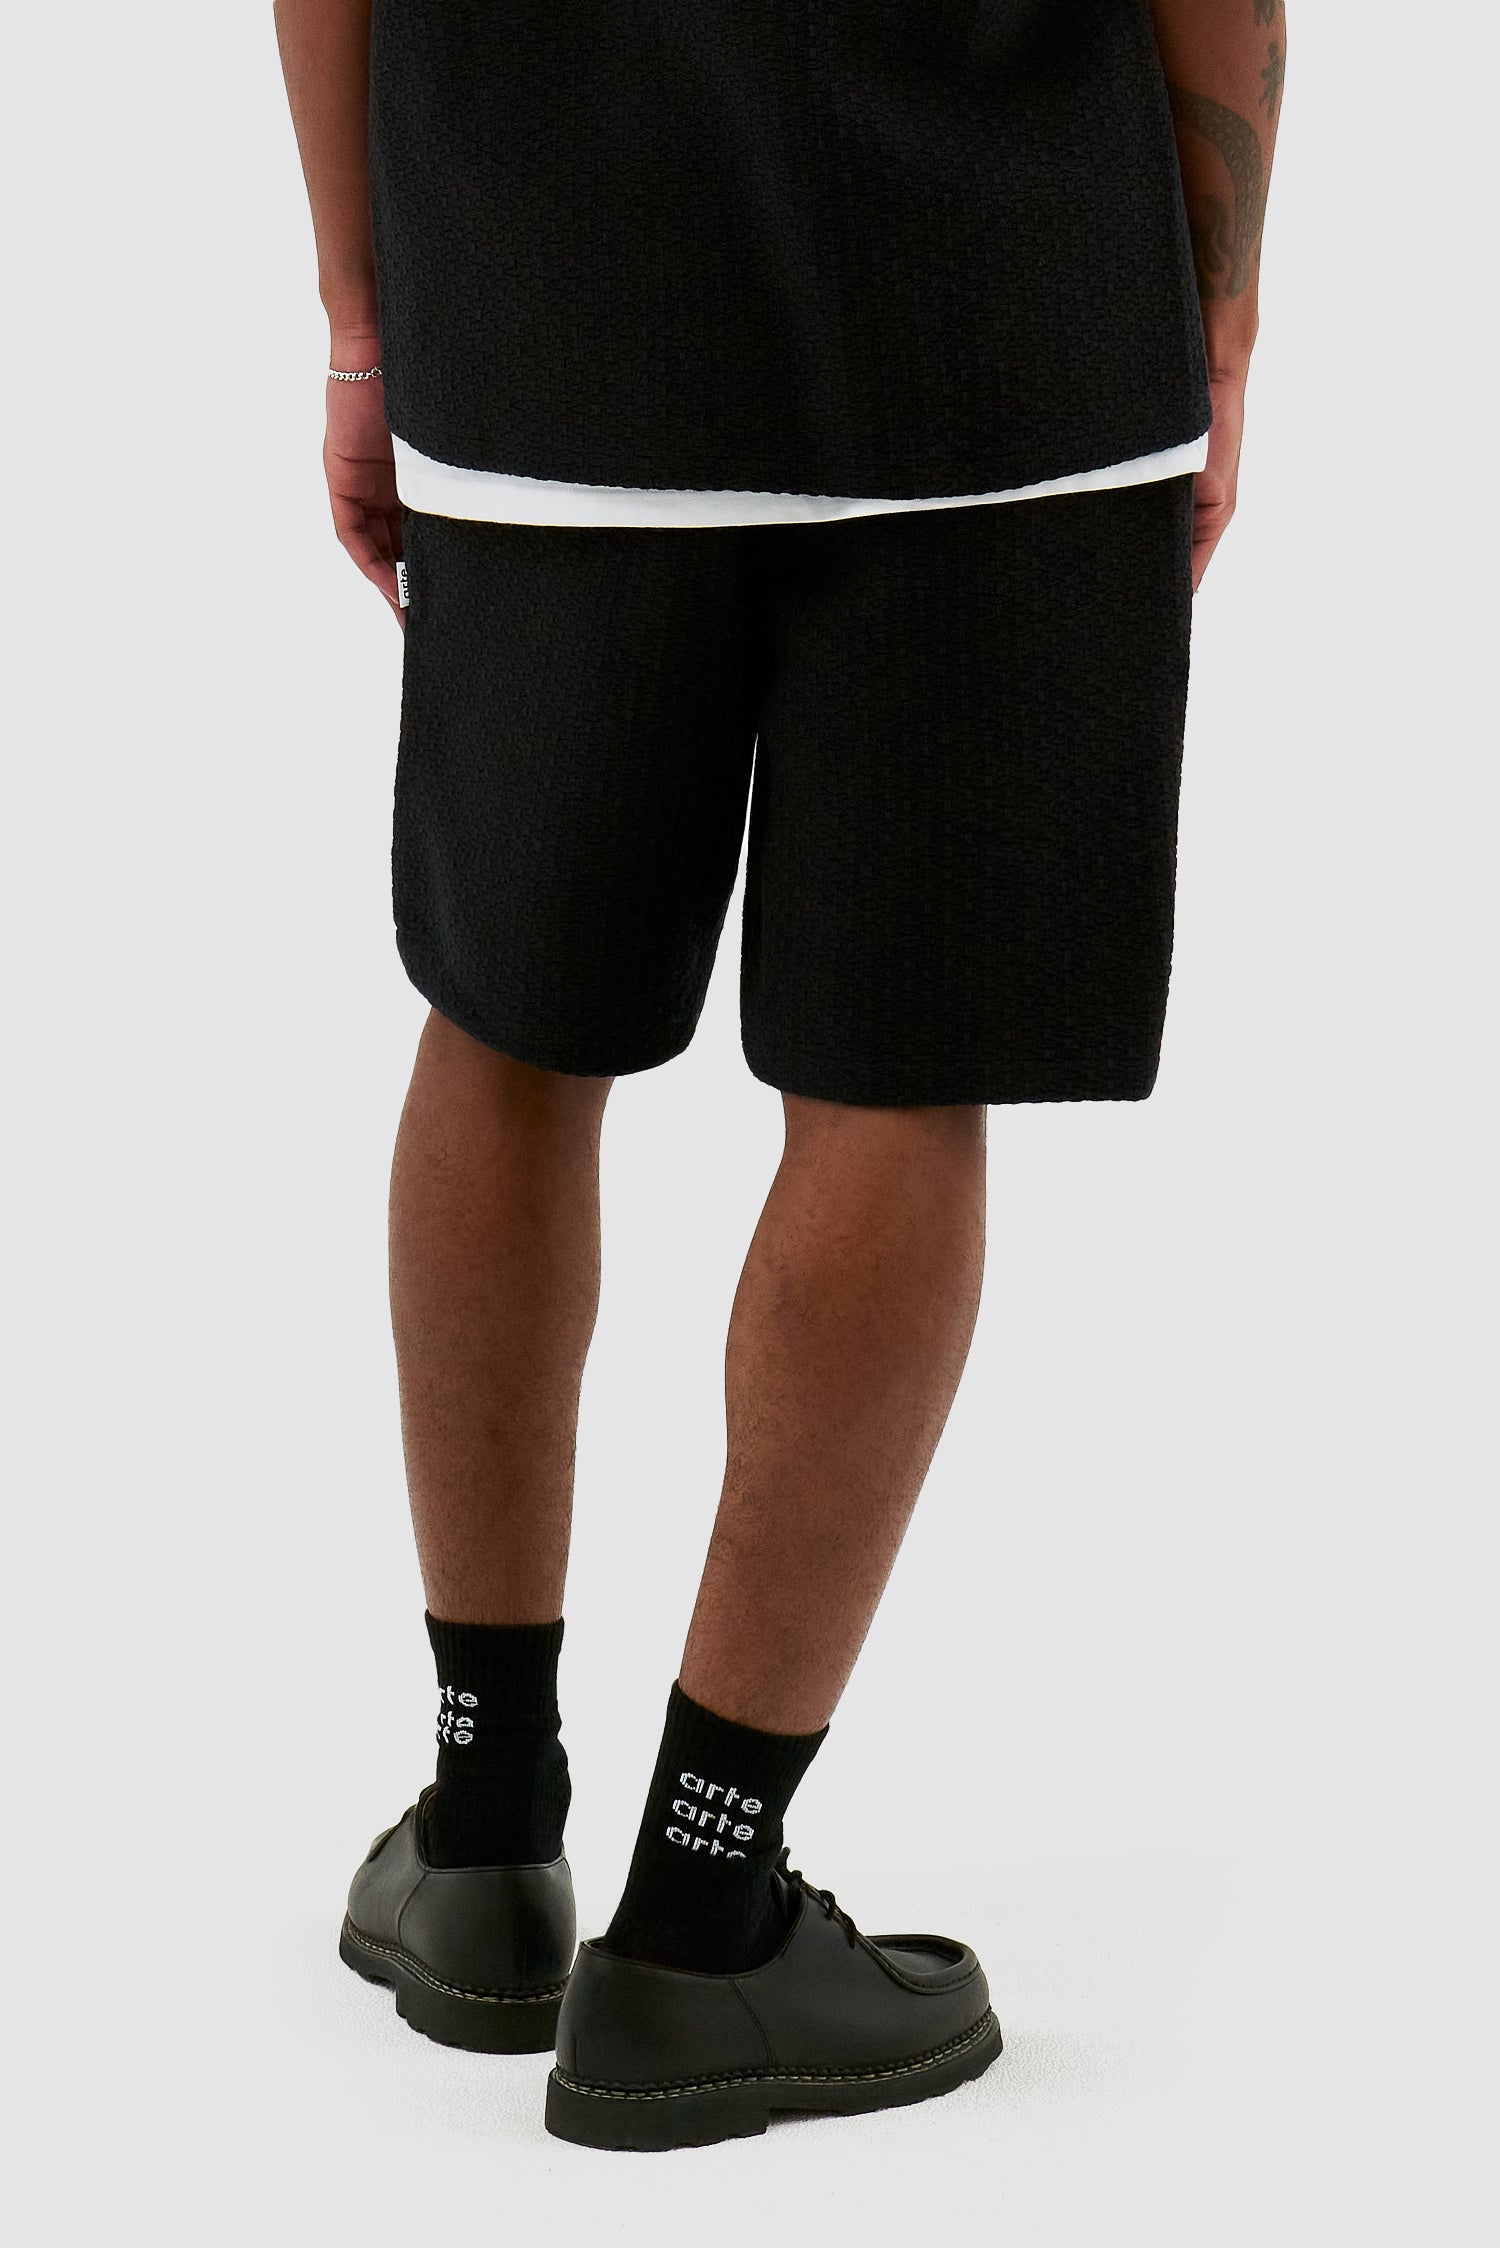 Smith Shorts - Black